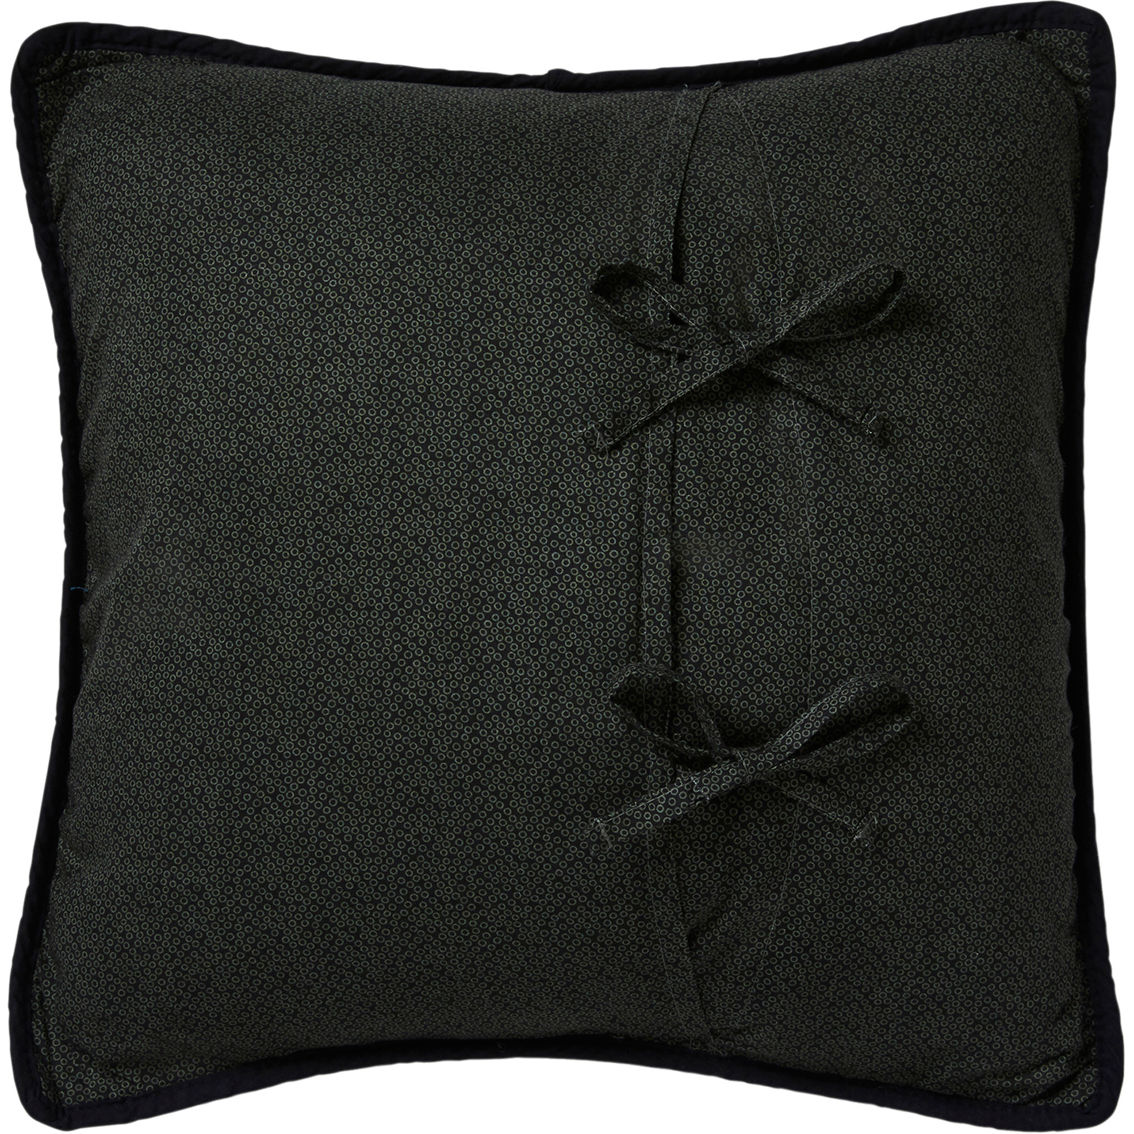 Donna Sharp Bear Lake Decorative Pillow - Image 2 of 3